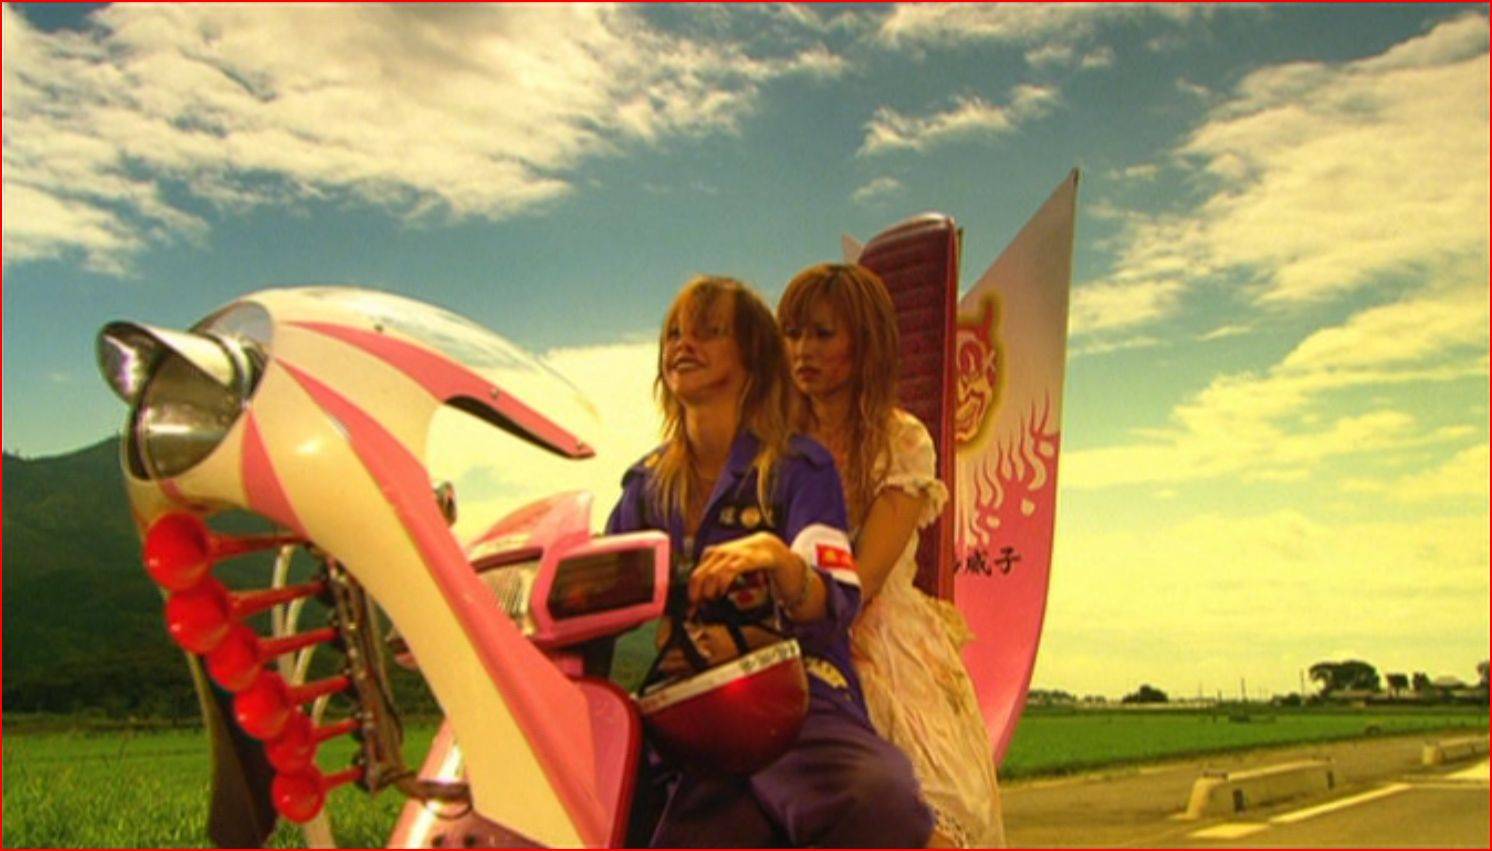 Kamikaze Girls (2004)